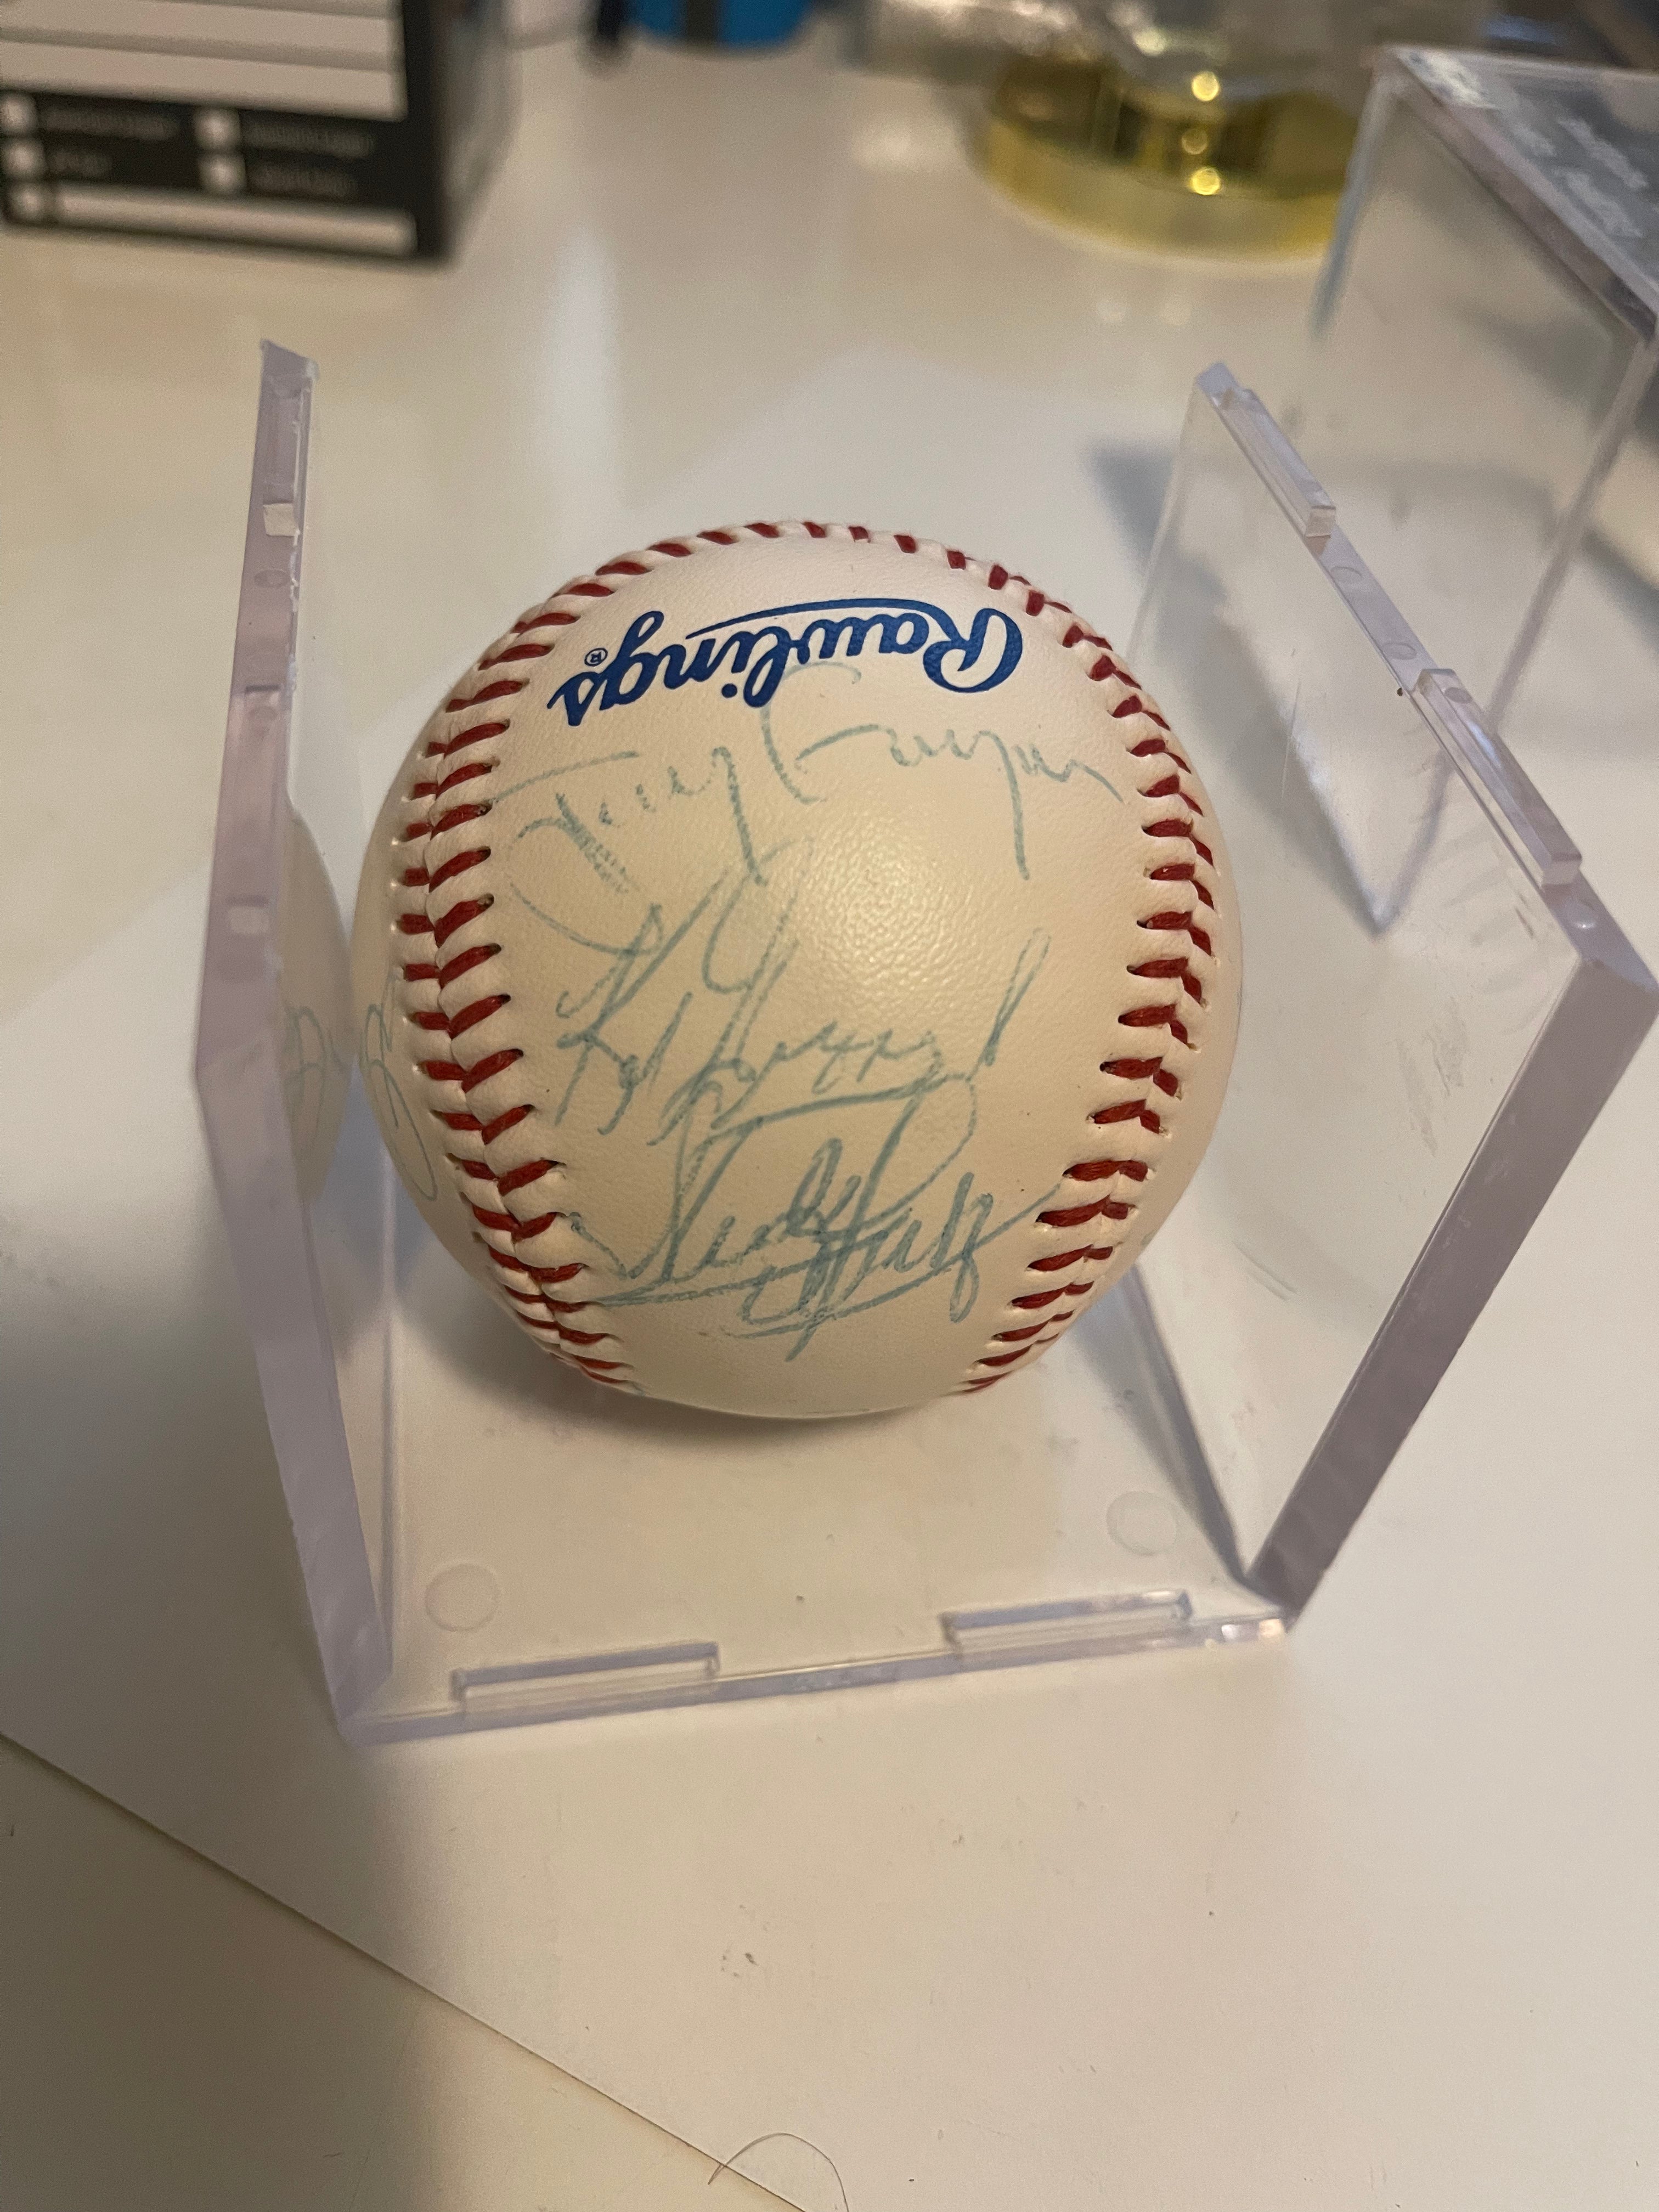 1991 All-Star Baseball game multiple autographs rare ball with COA